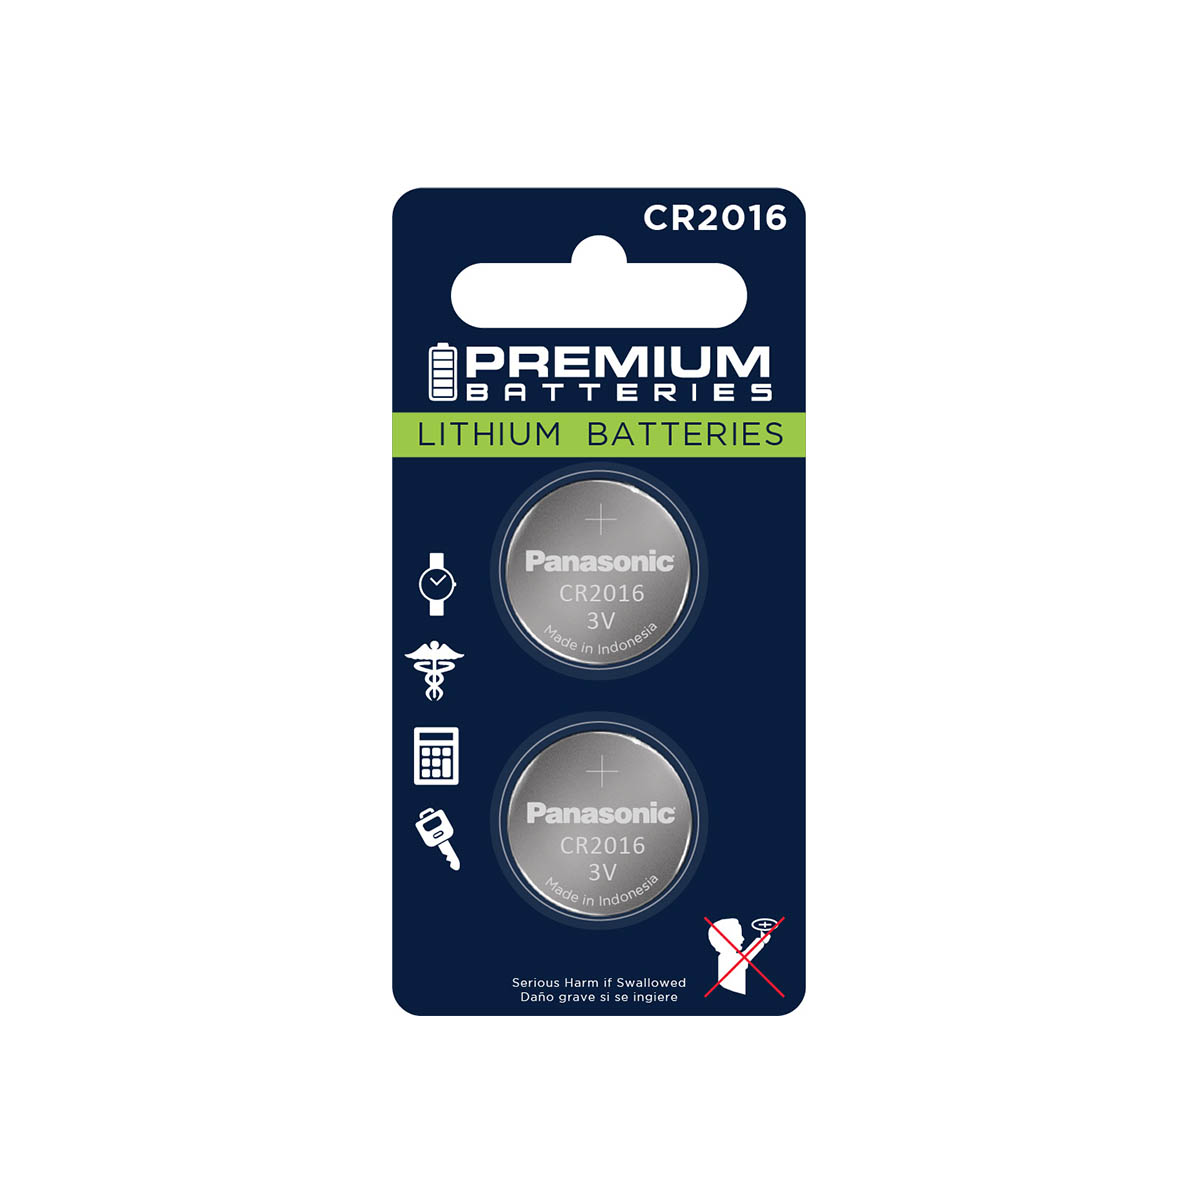 Premium Batteries CR2016 Battery 3V Lithium Coin Cell (2 Panasonic Batteries) (Child Resistant Packaging)